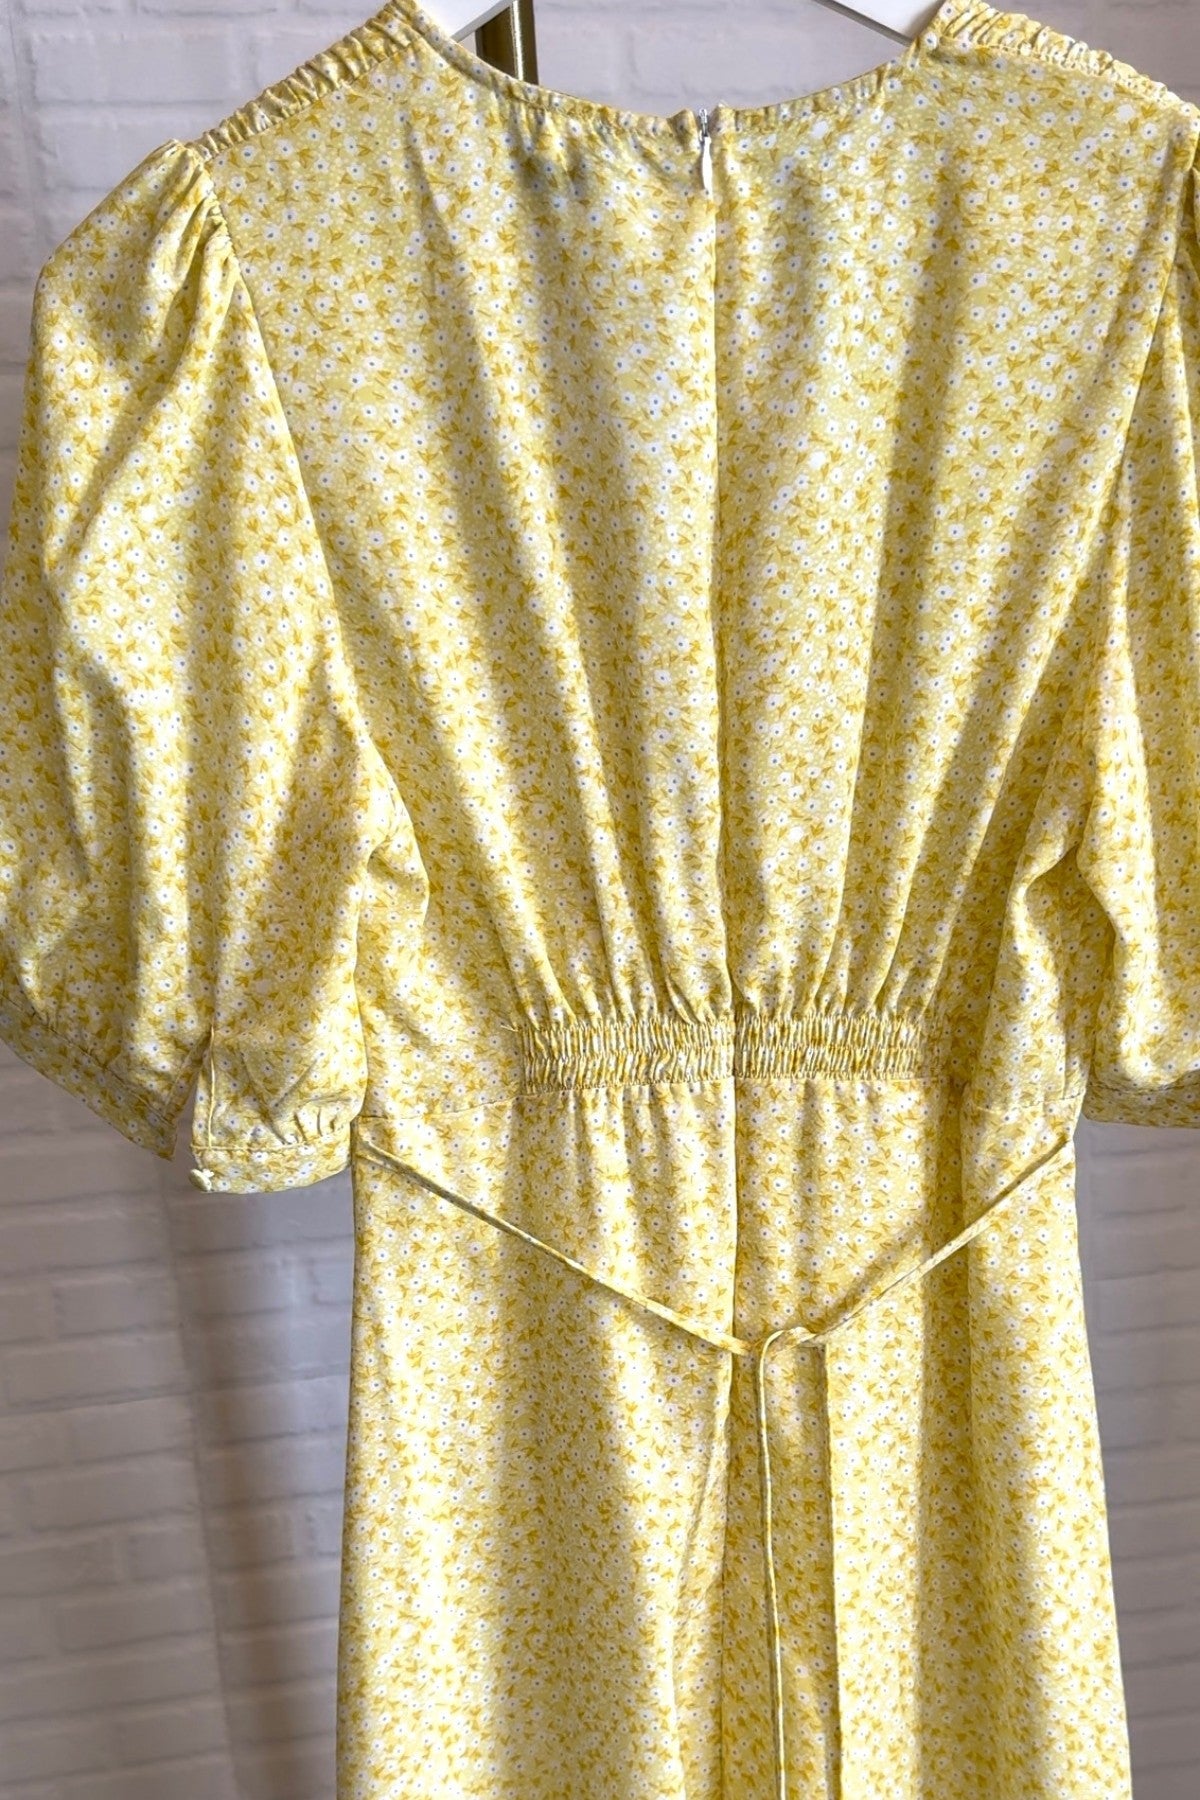 SUMMER Floral Puff-Sleeve Midi Dress (Yellow)